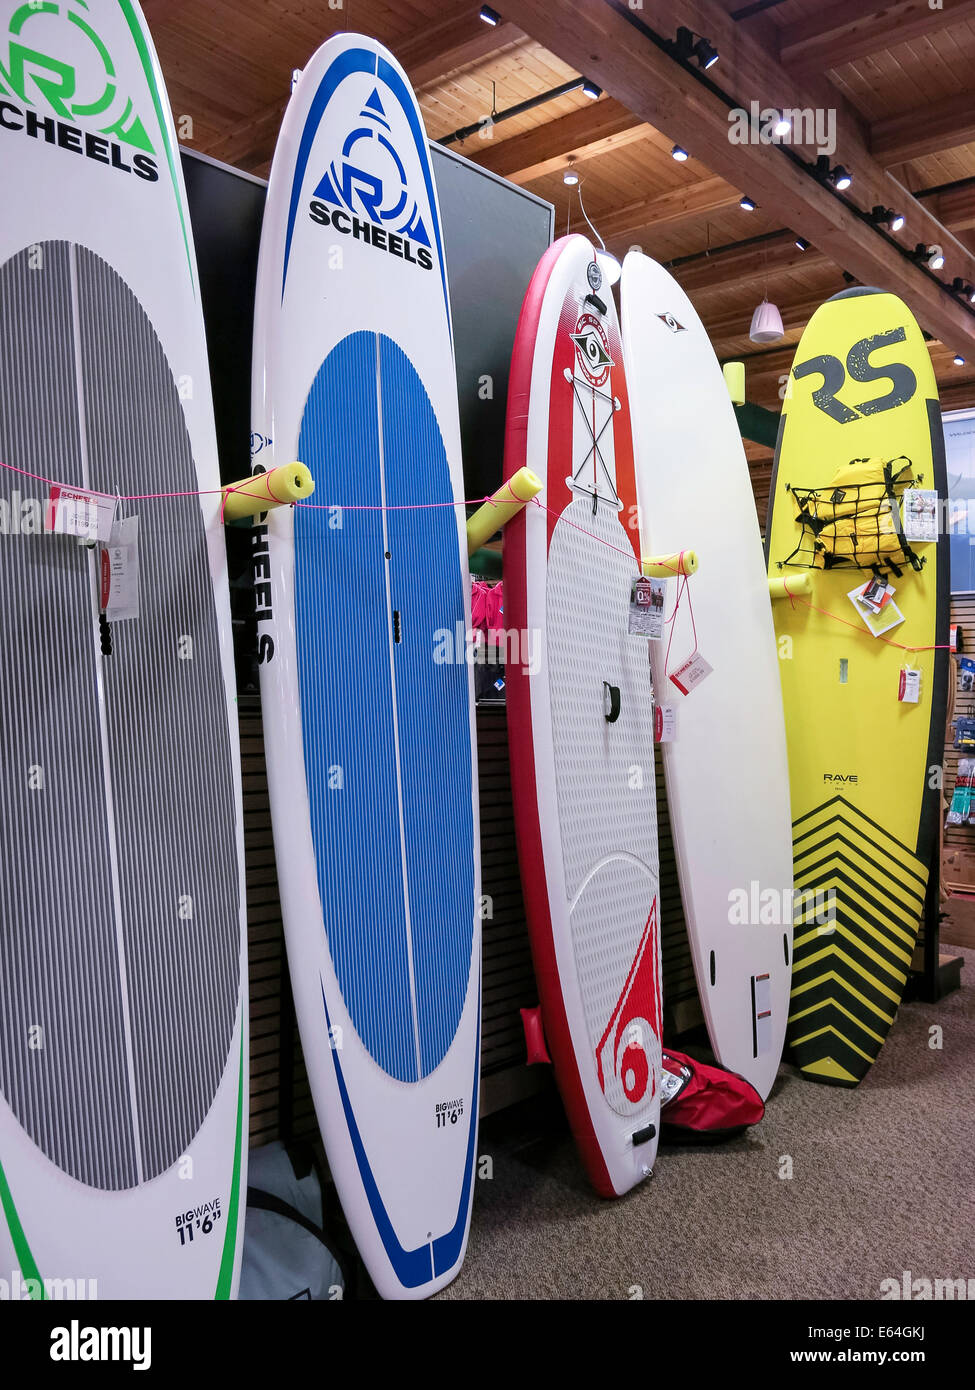 Paddle Board Display, Scheels Sporting Goods Store, Great Falls, Montana, USA Stockfoto